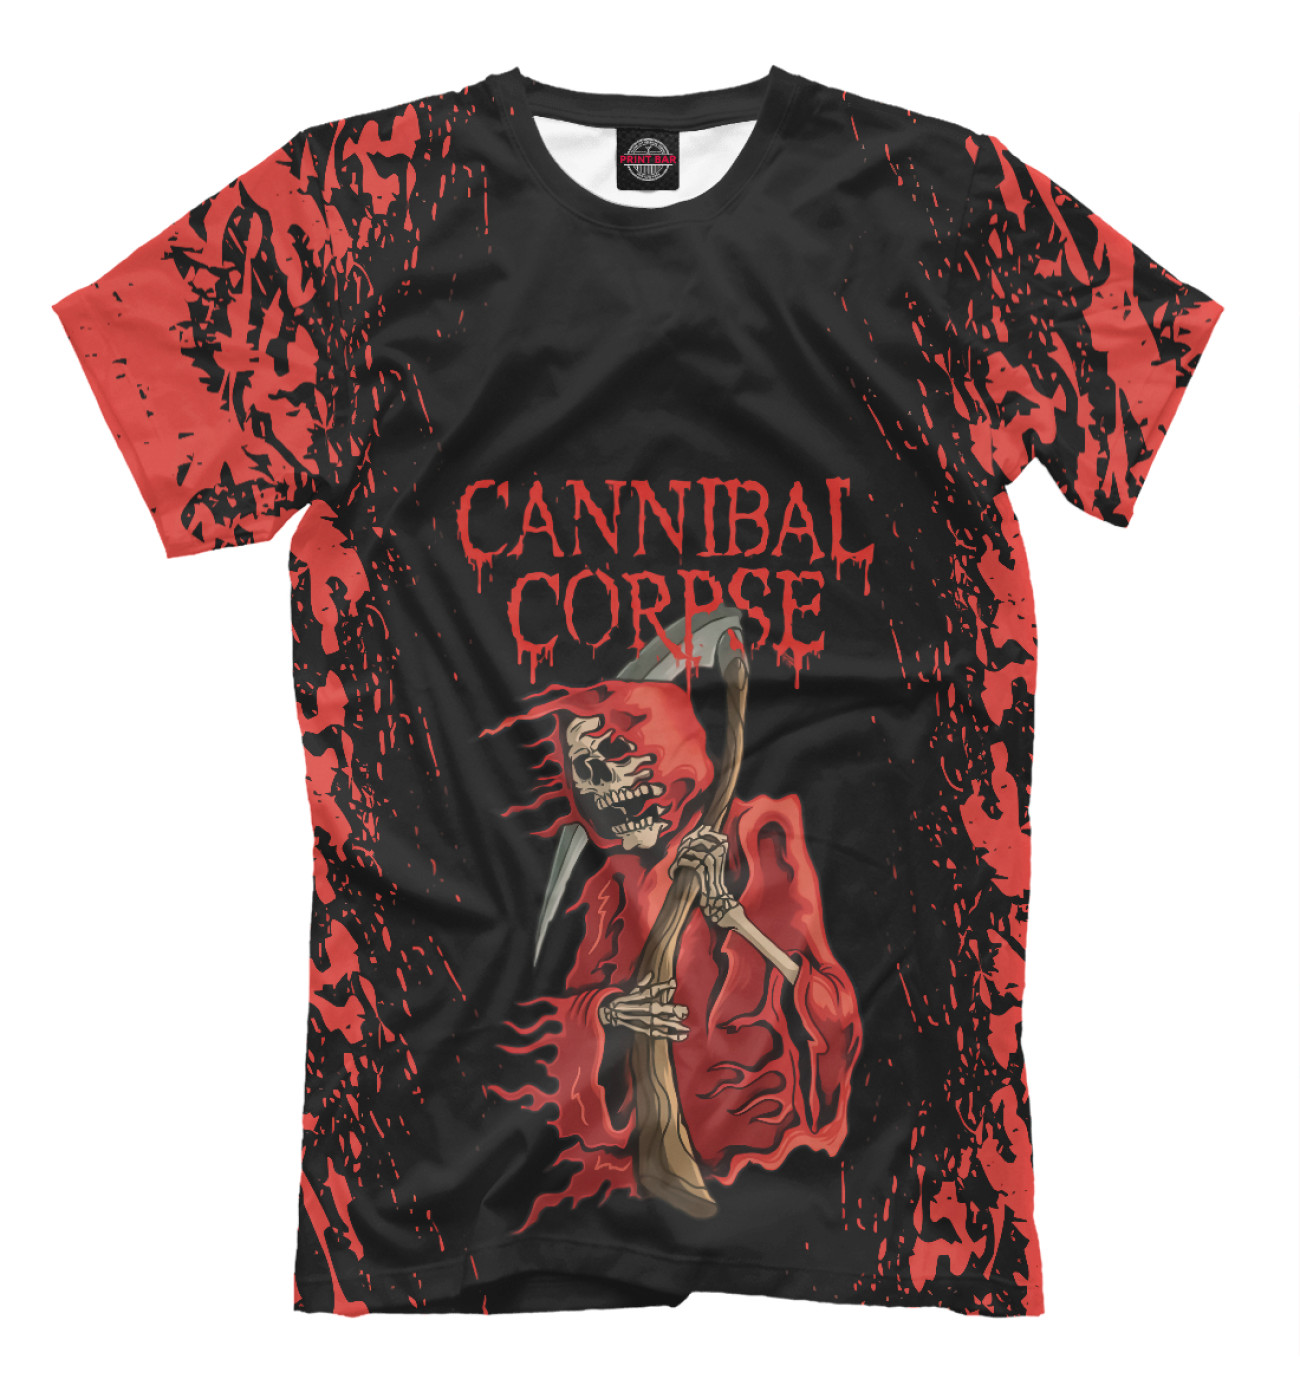 Мужская Футболка Cannibal Corpse, артикул: CCR-530737-fut-2